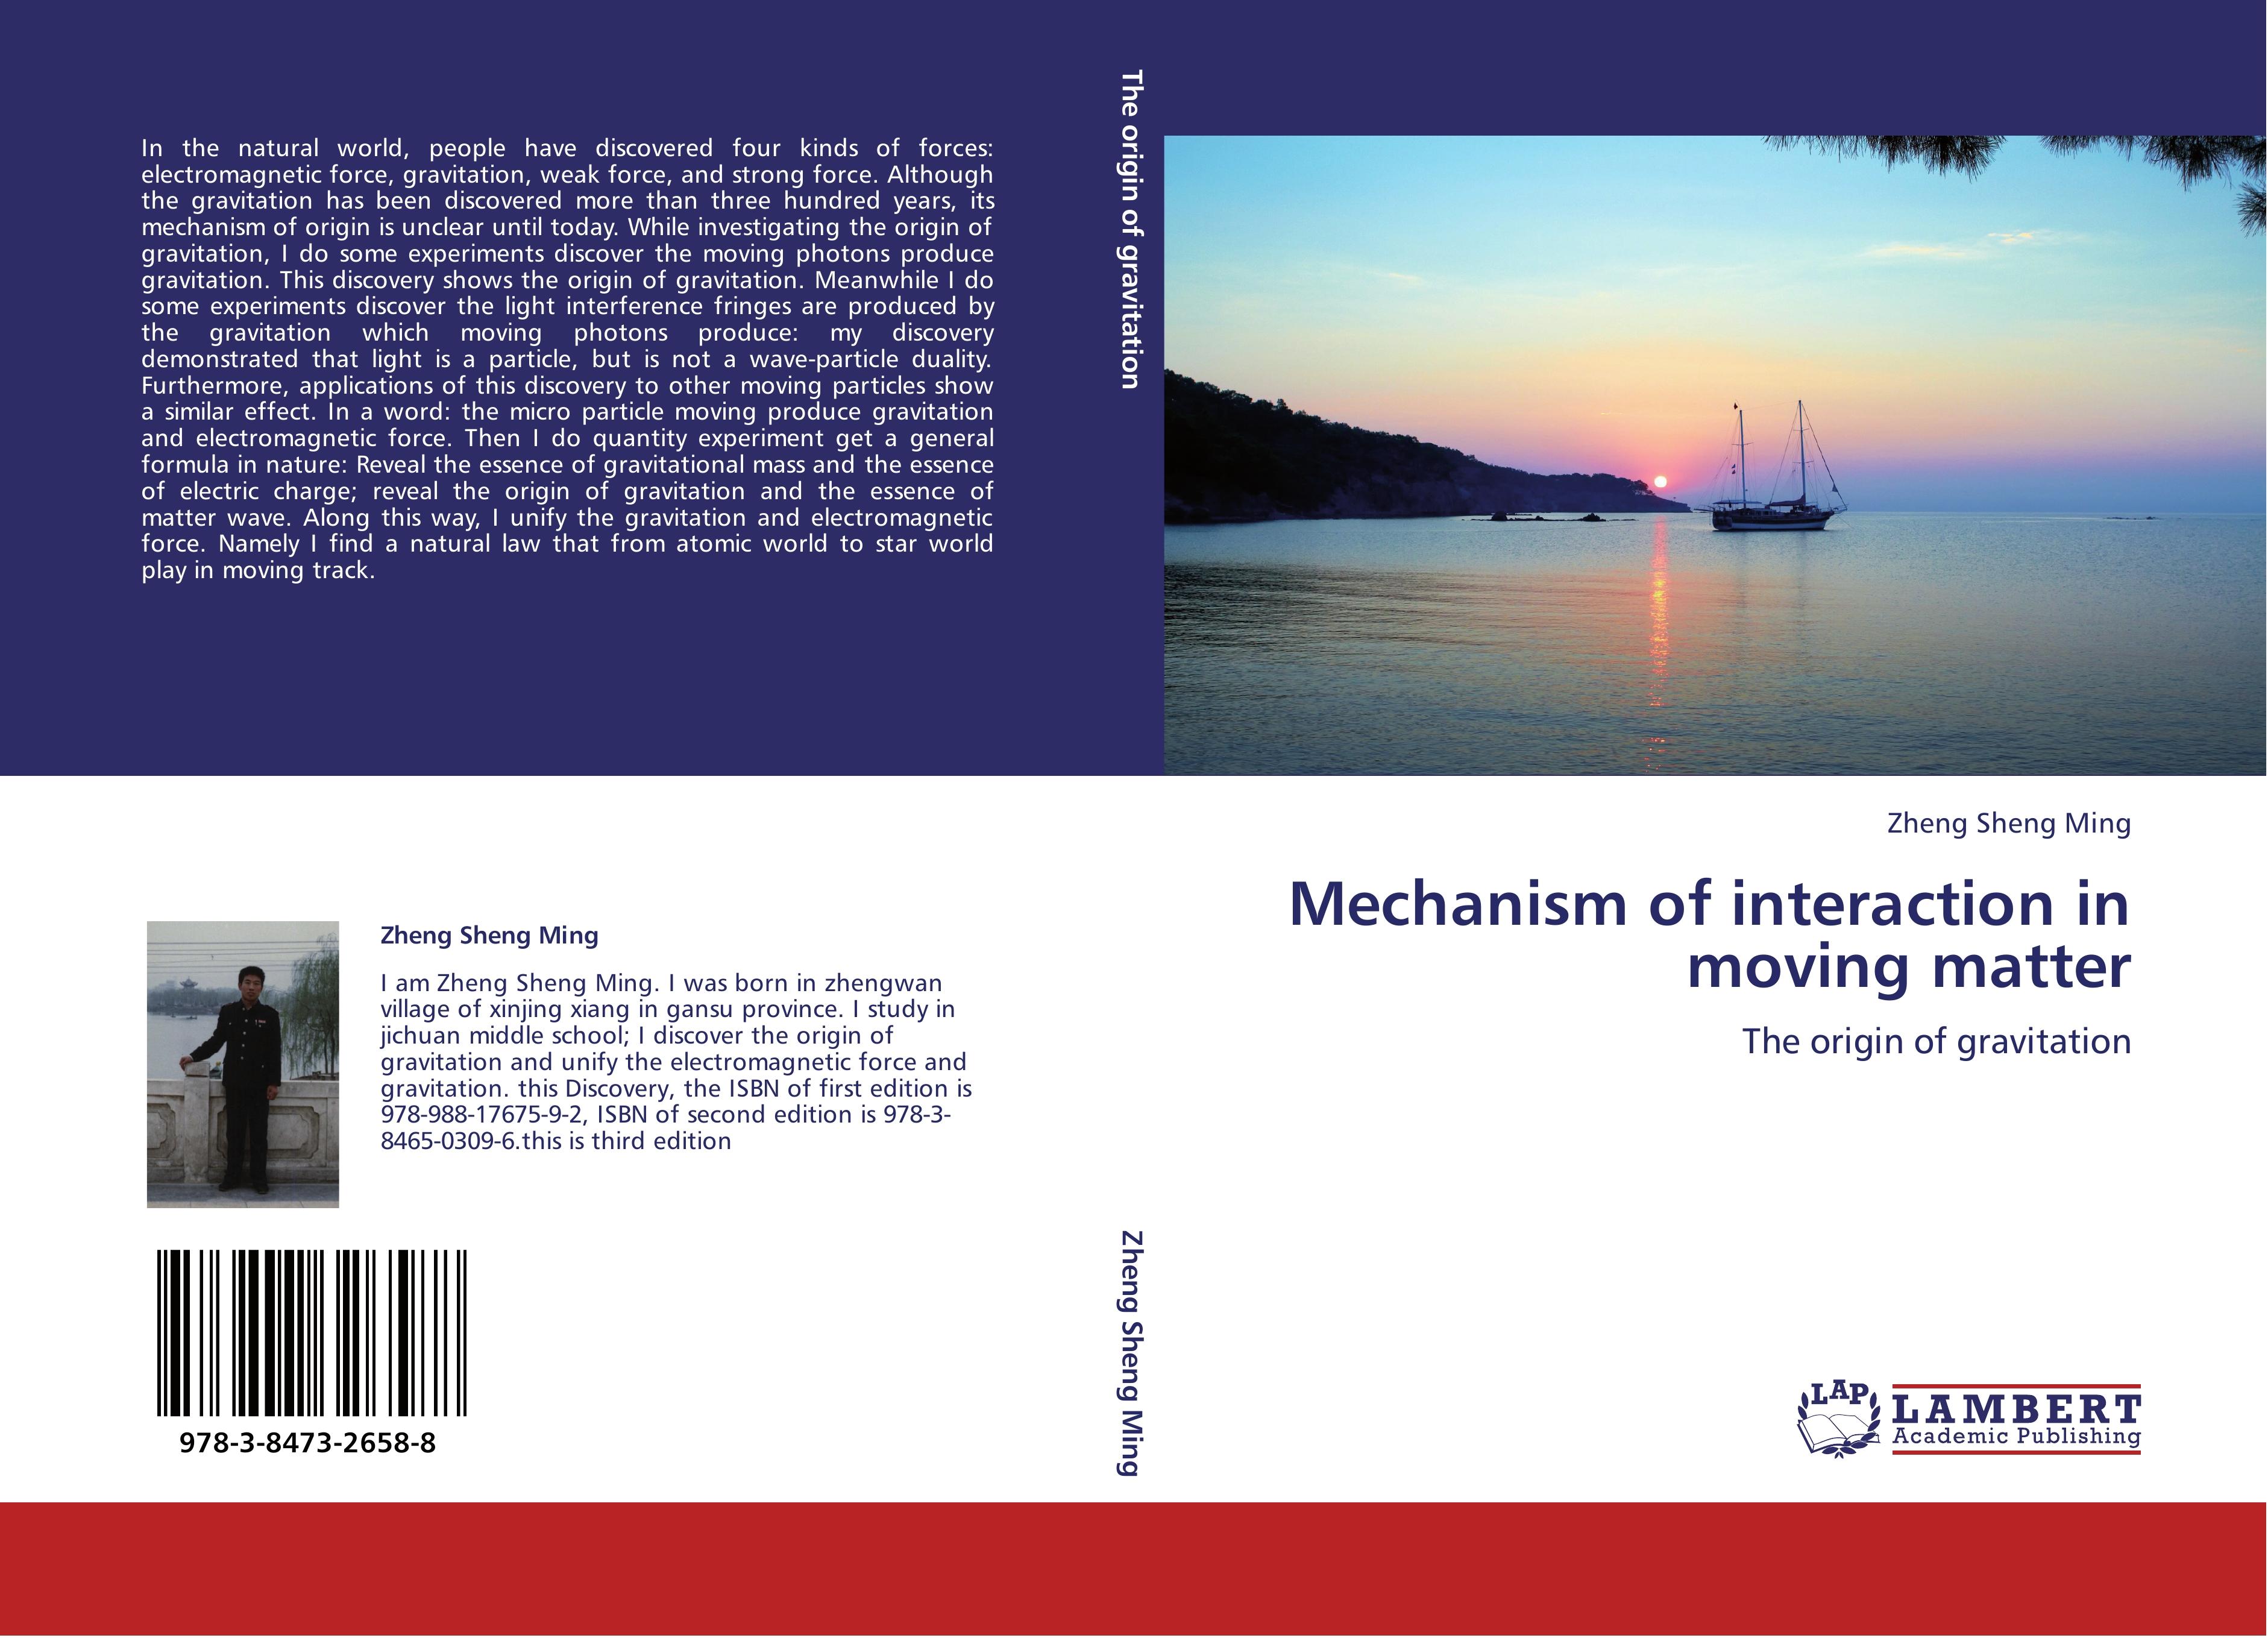 Mechanism of interaction in moving matter / The origin of gravitation / Zheng Sheng Ming / Taschenbuch / Paperback / 140 S. / Englisch / 2011 / LAP LAMBERT Academic Publishing / EAN 9783847326588 - Sheng Ming, Zheng